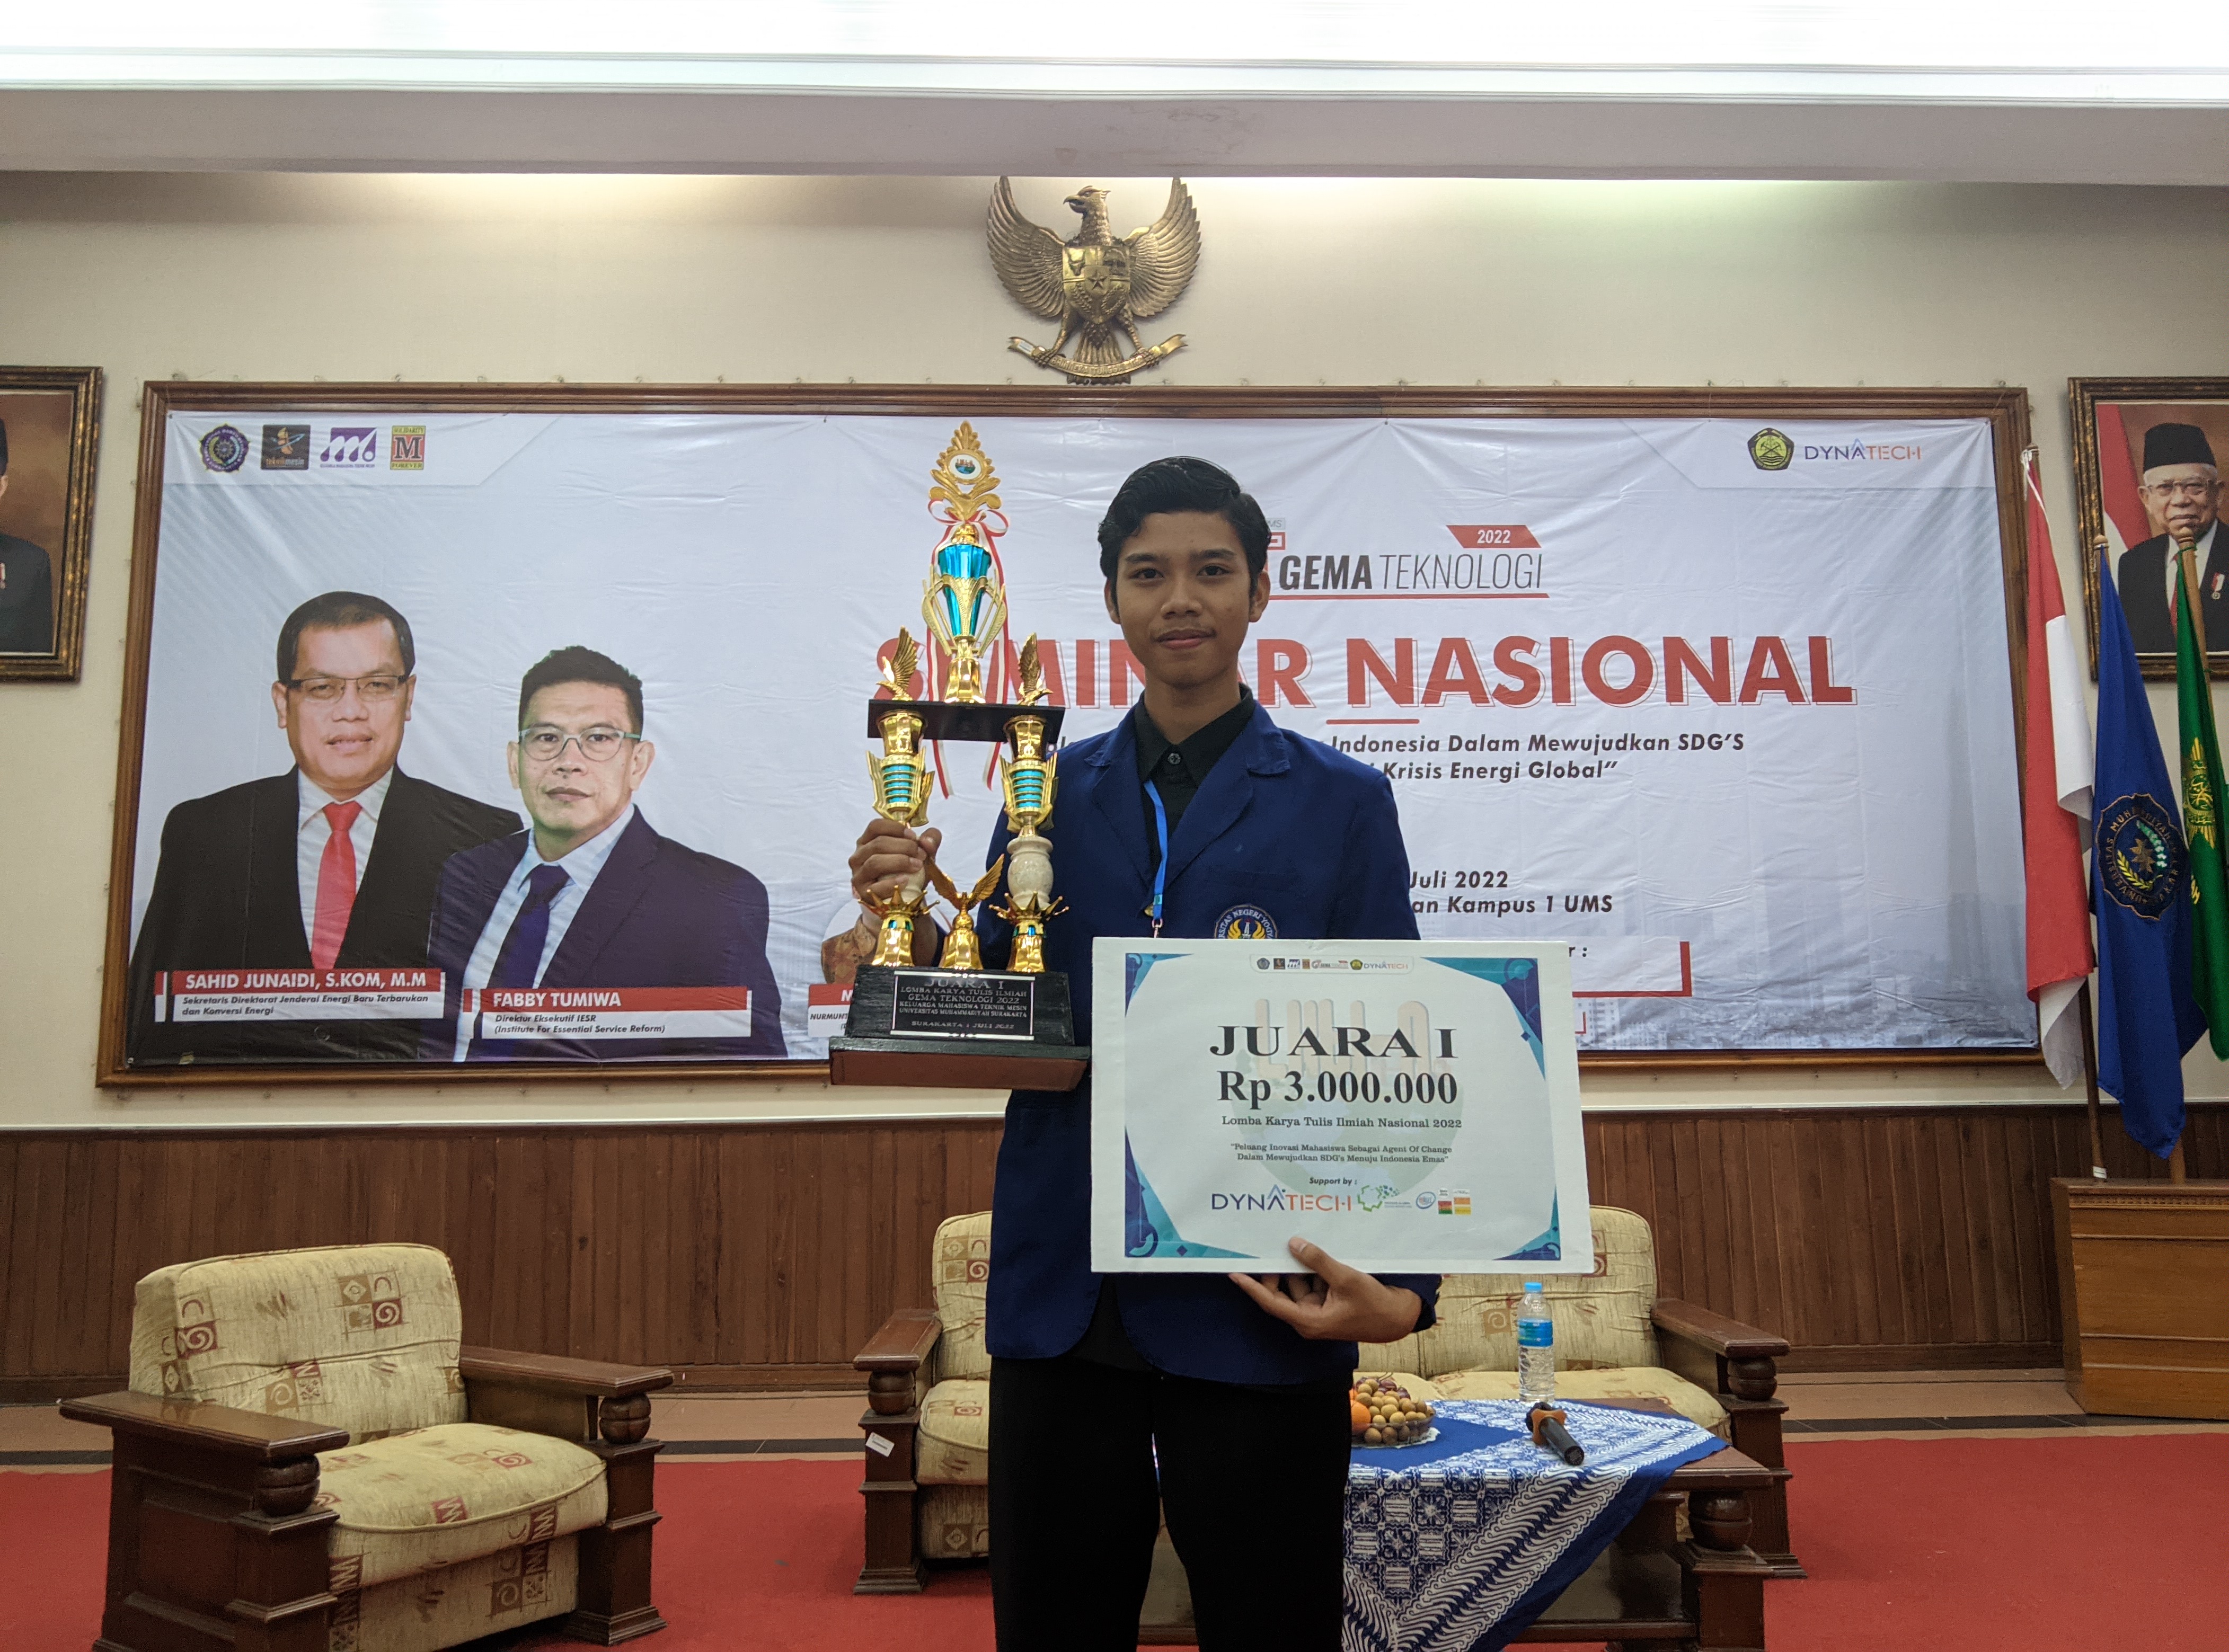 Foto Lomba Karya Tulis Ilmiah Nasional Gema Teknologi 2022 yang diselenggarakan oleh Universitas Muhammadiyah Surakarta